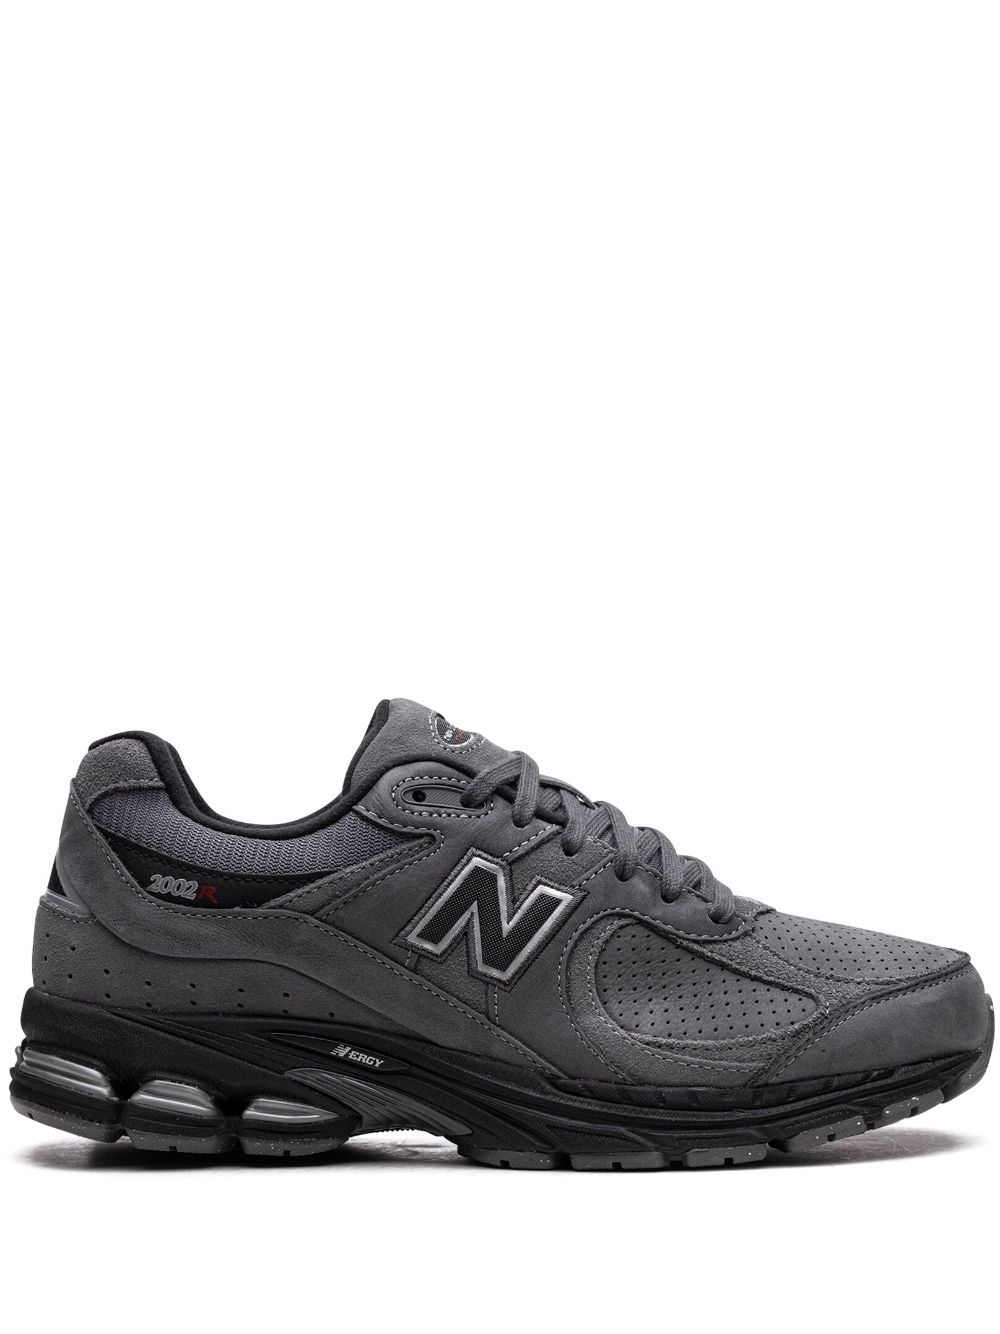 New Balance 2002R "Castlerock / Black" leather sneakers - Grey von New Balance